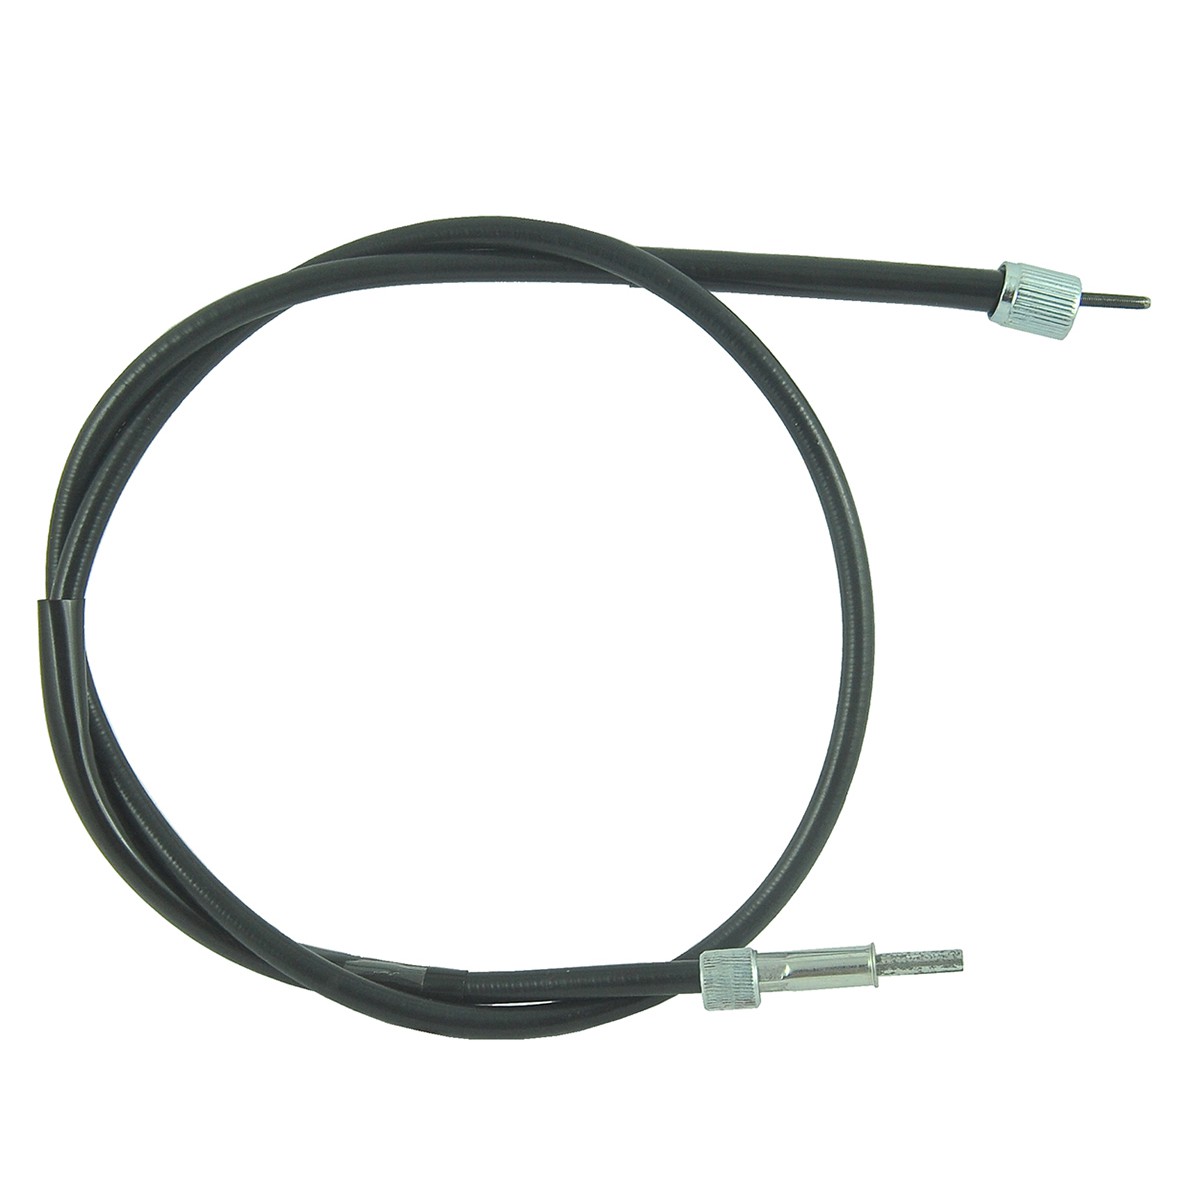 Counter cable / 1020 mm / Kubota L3608 / TC422-34653 / 5-25-123-18